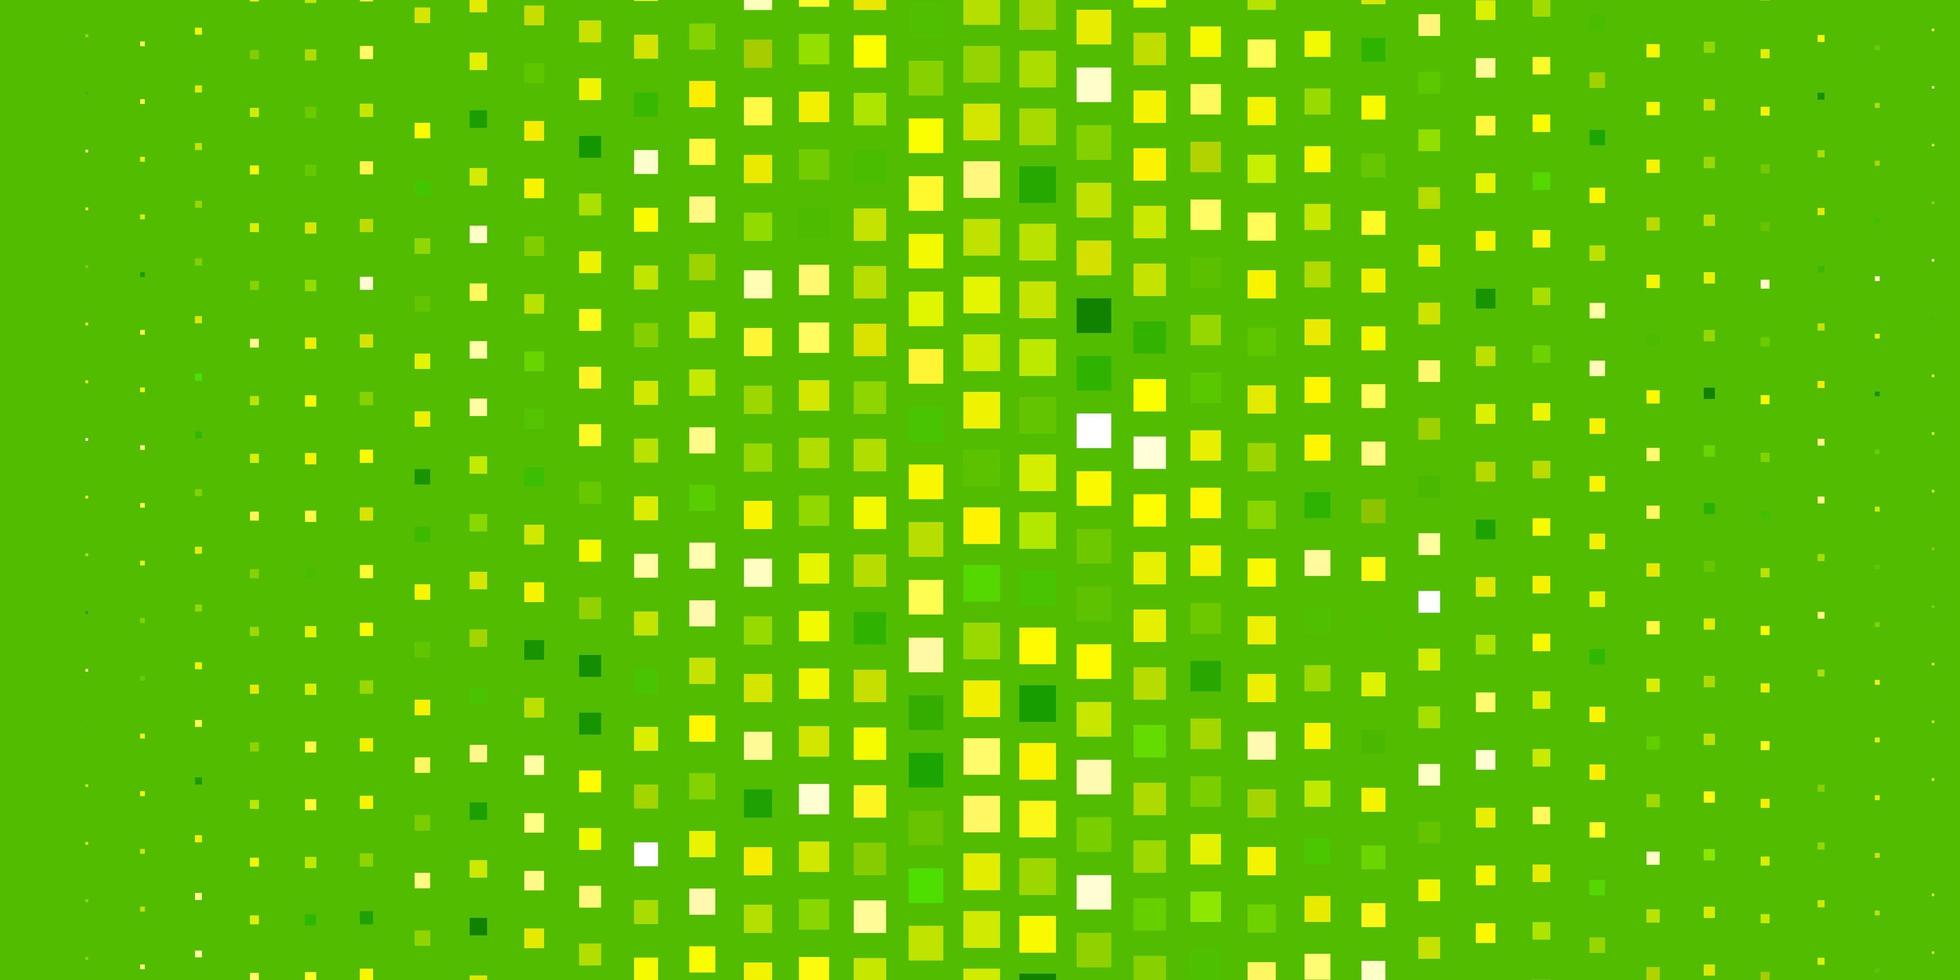 ljusgrönt, gult vektormönster i fyrkantig stil. vektor